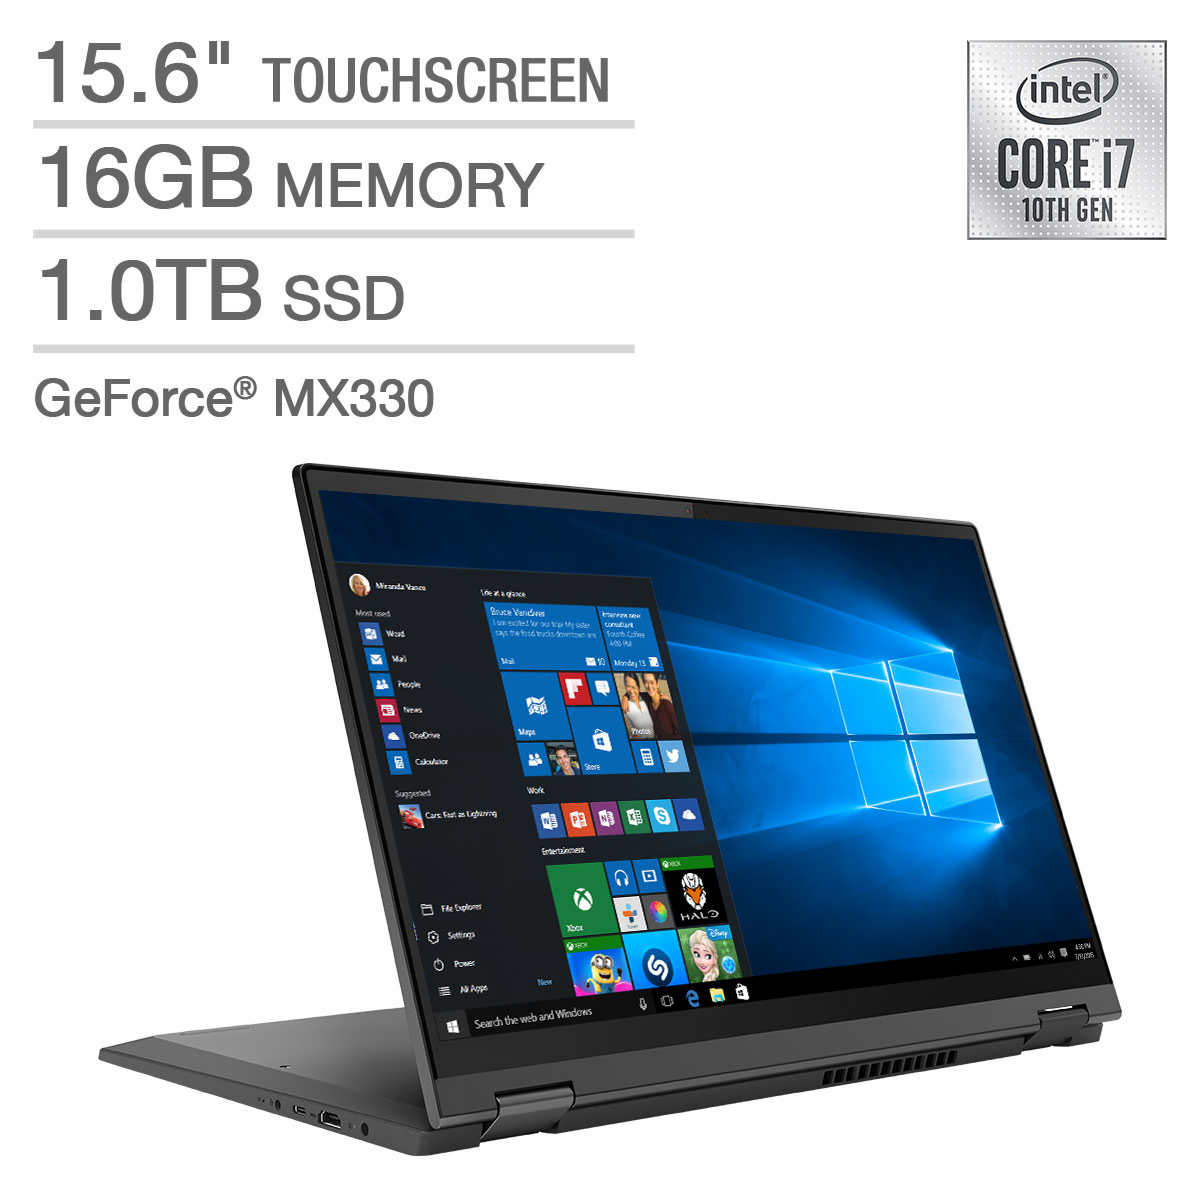 Lenovo Flex 15.6" 2-in-1 Touchscreen Laptop - 10th Gen Intel Core i7-1065G7 - GeForce MX330 - 4K UHD - Windows 10 Professional $1199.99 + free shipping $999.99